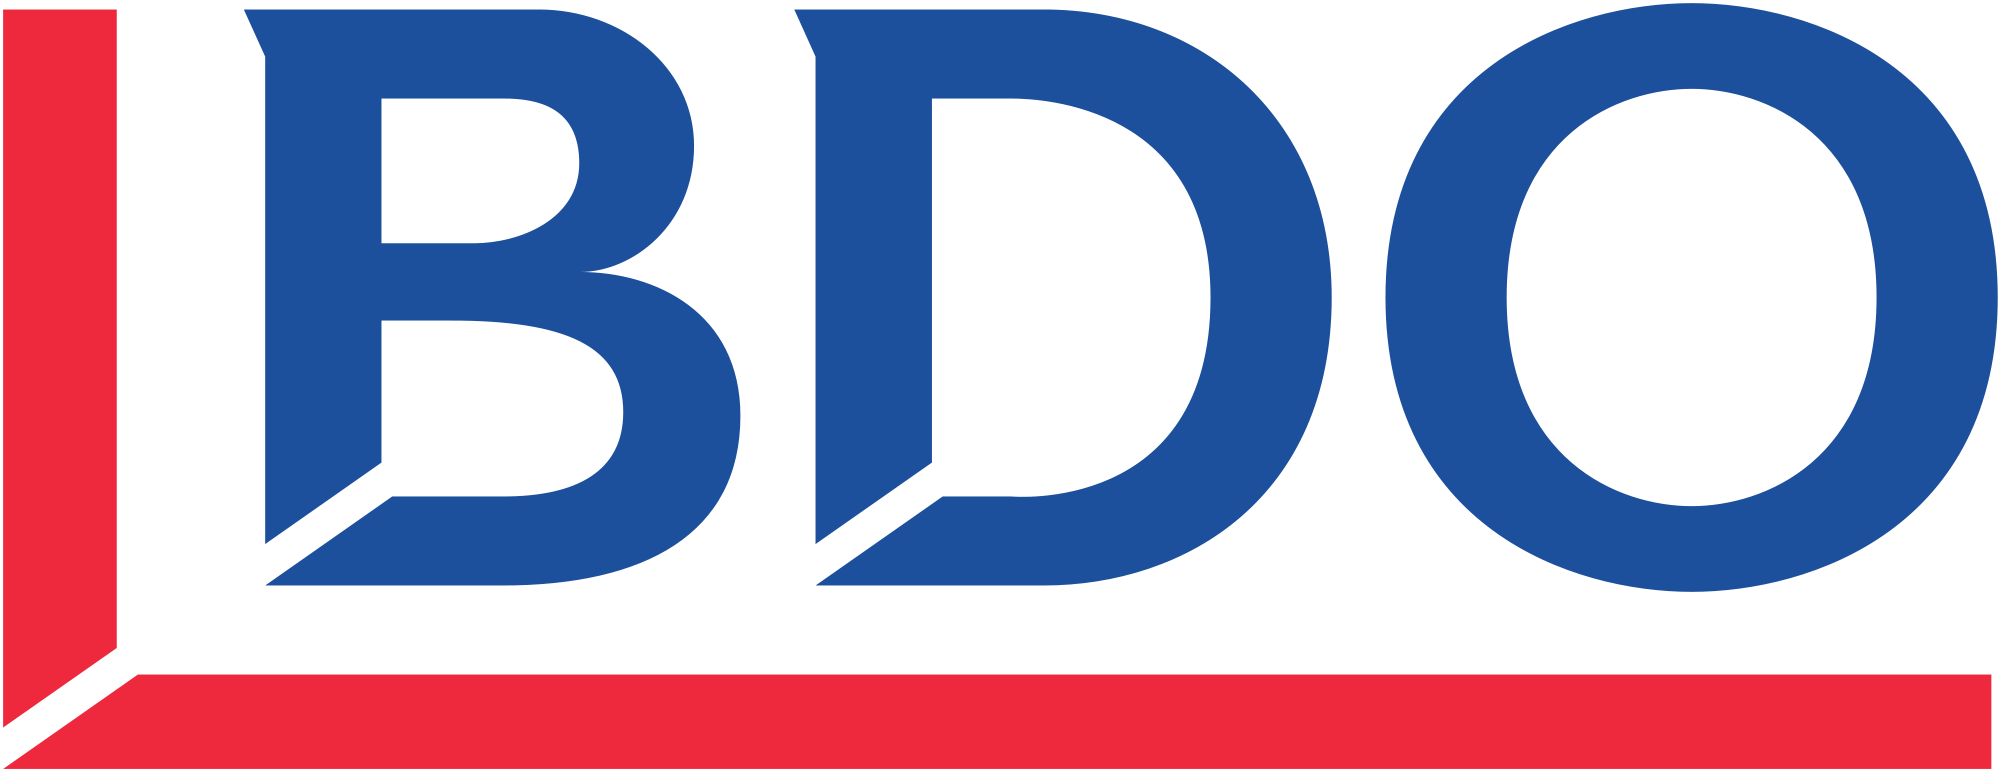 Logo BDO Luxembourg